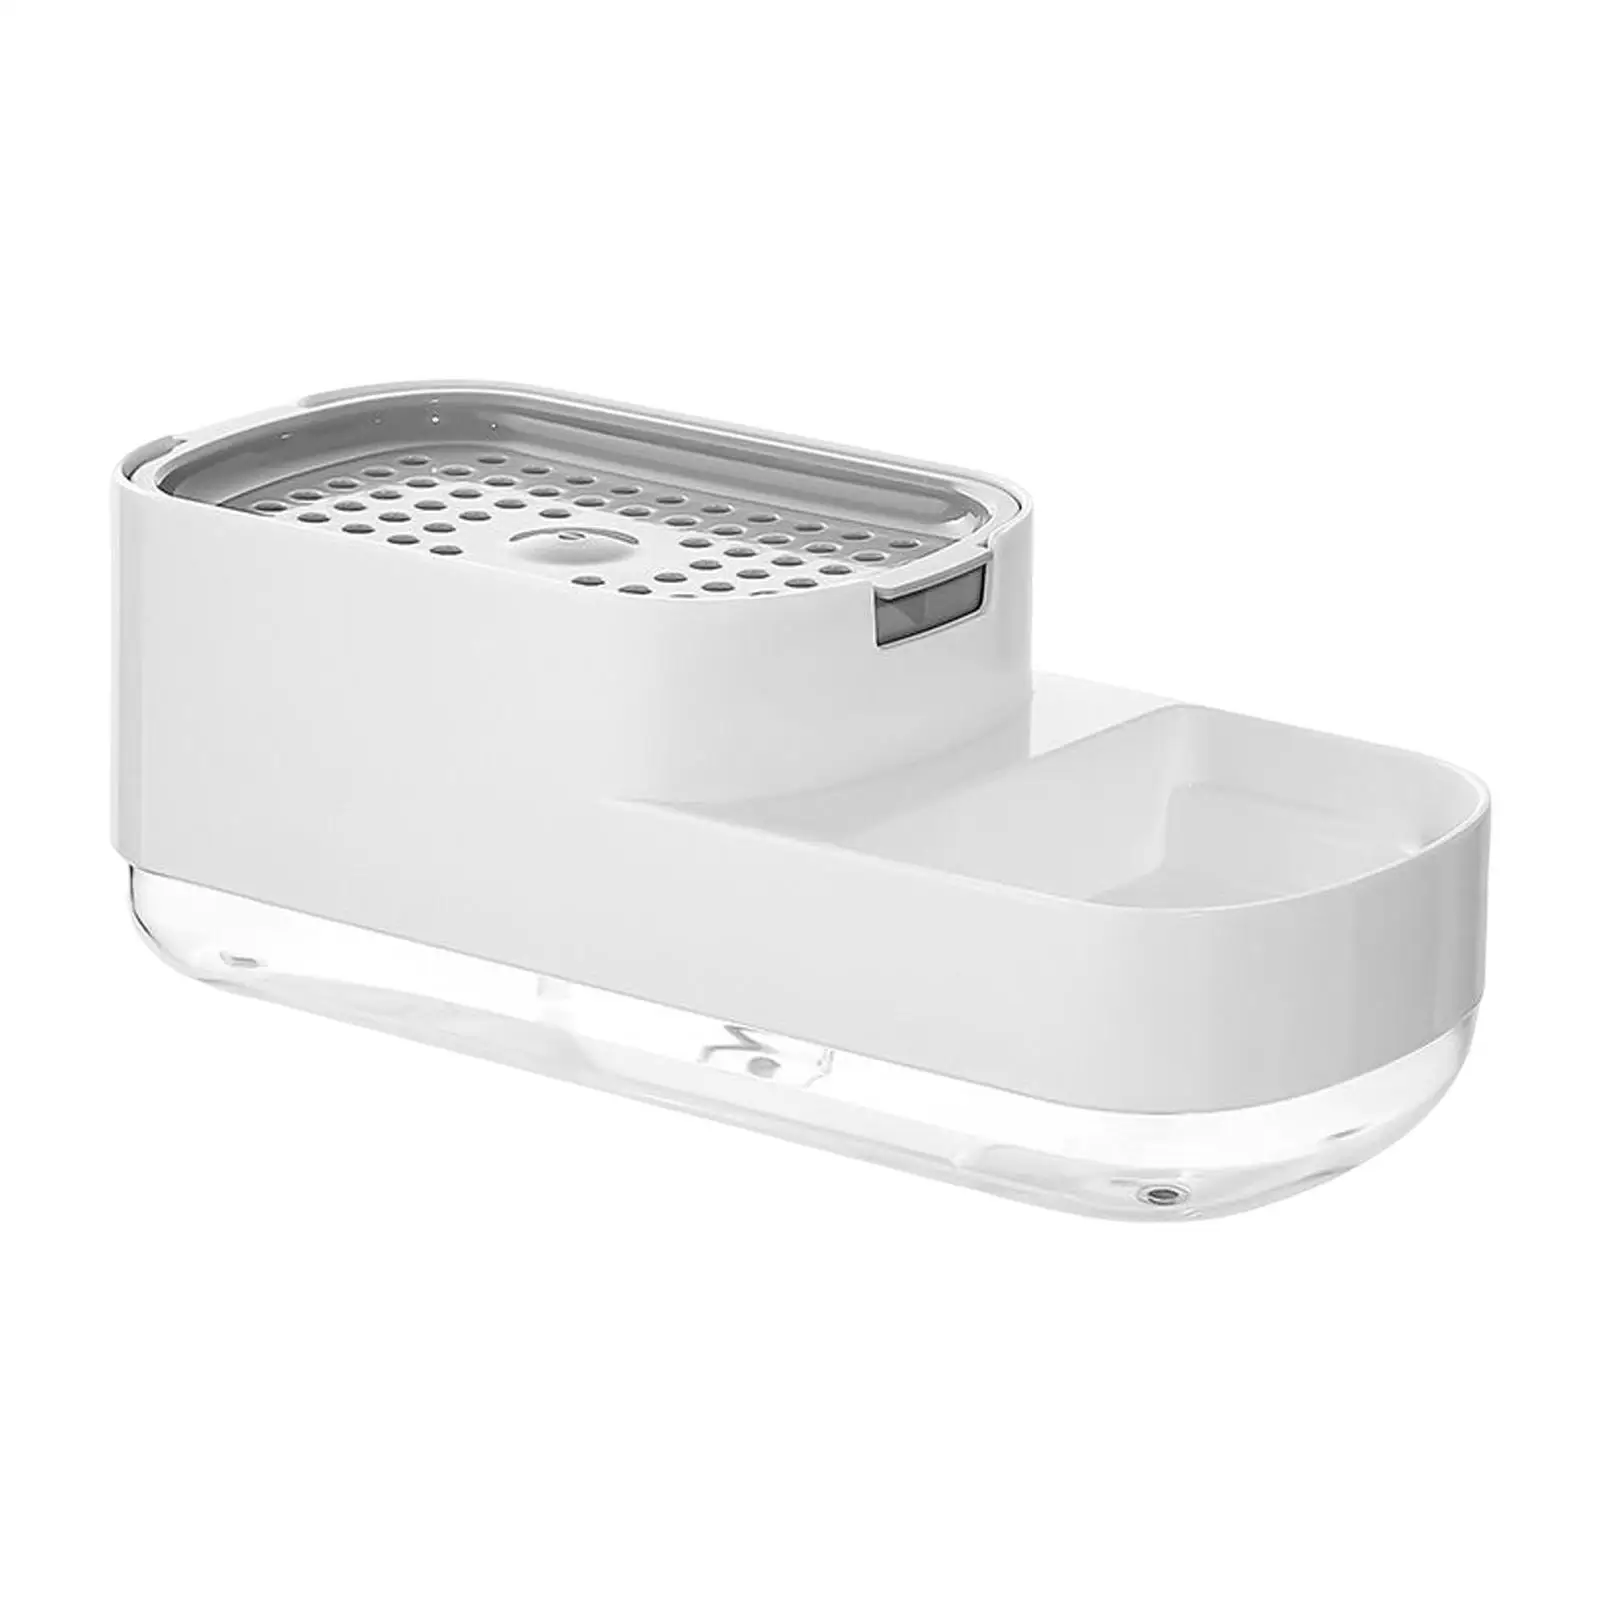 Dish Soap Dispenser with Sponge Holder Countertop Organizer for Bathroom